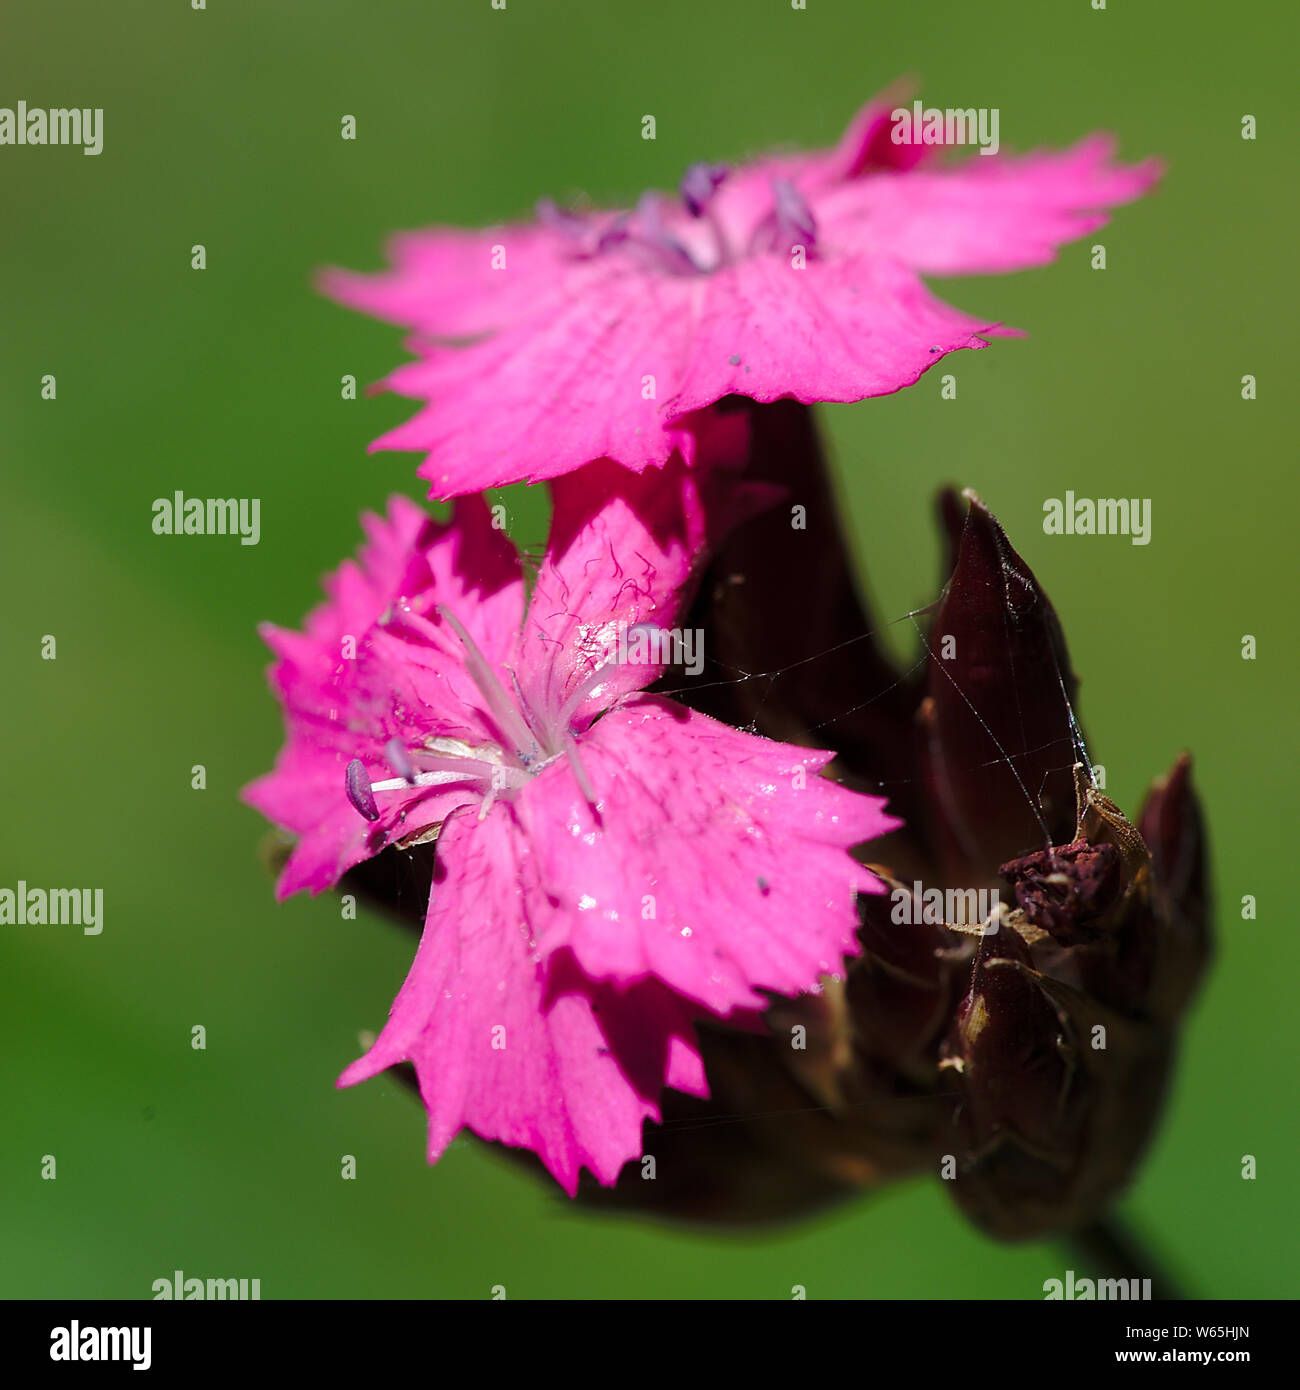 Rosa fiori di garofano dei Certosini; Dianthus carthusianorum, Caryophyllaceae Foto Stock